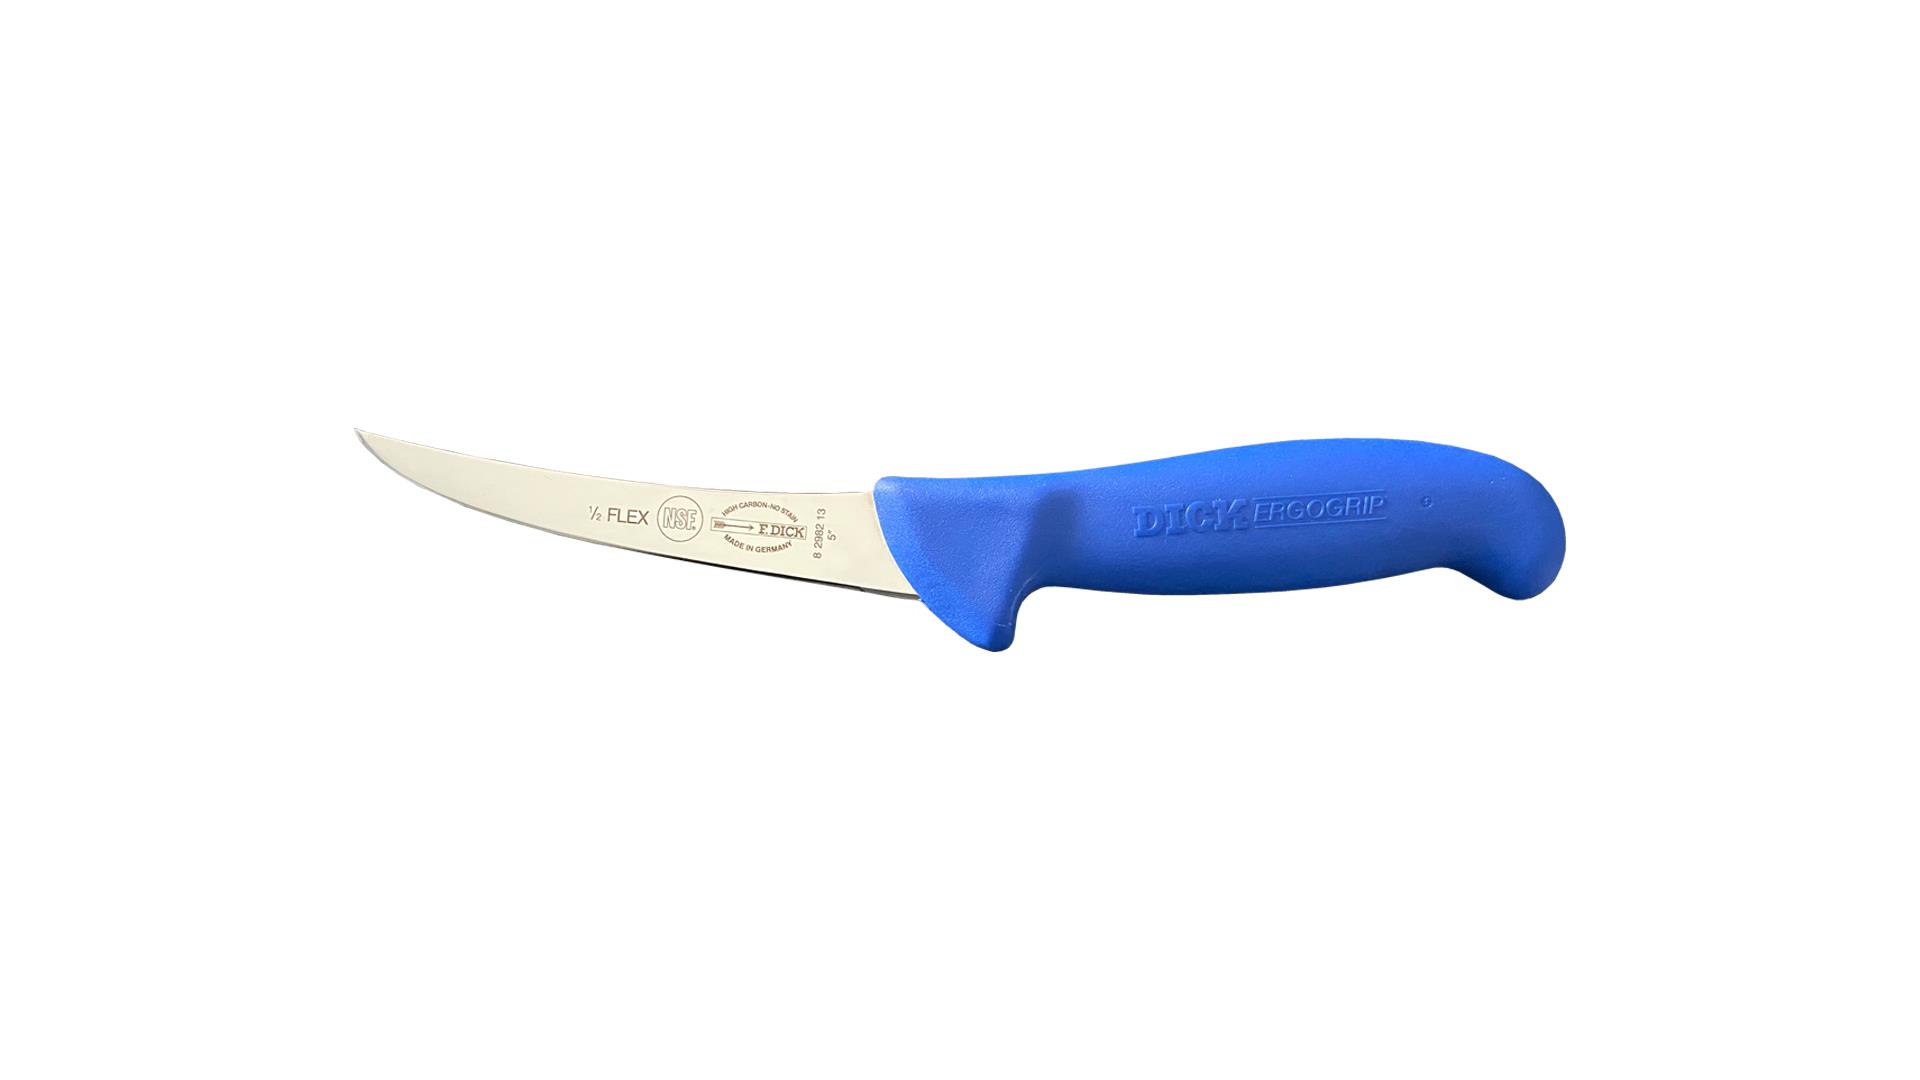 DICK Boning knife, curly blade, 13cm, semiflex